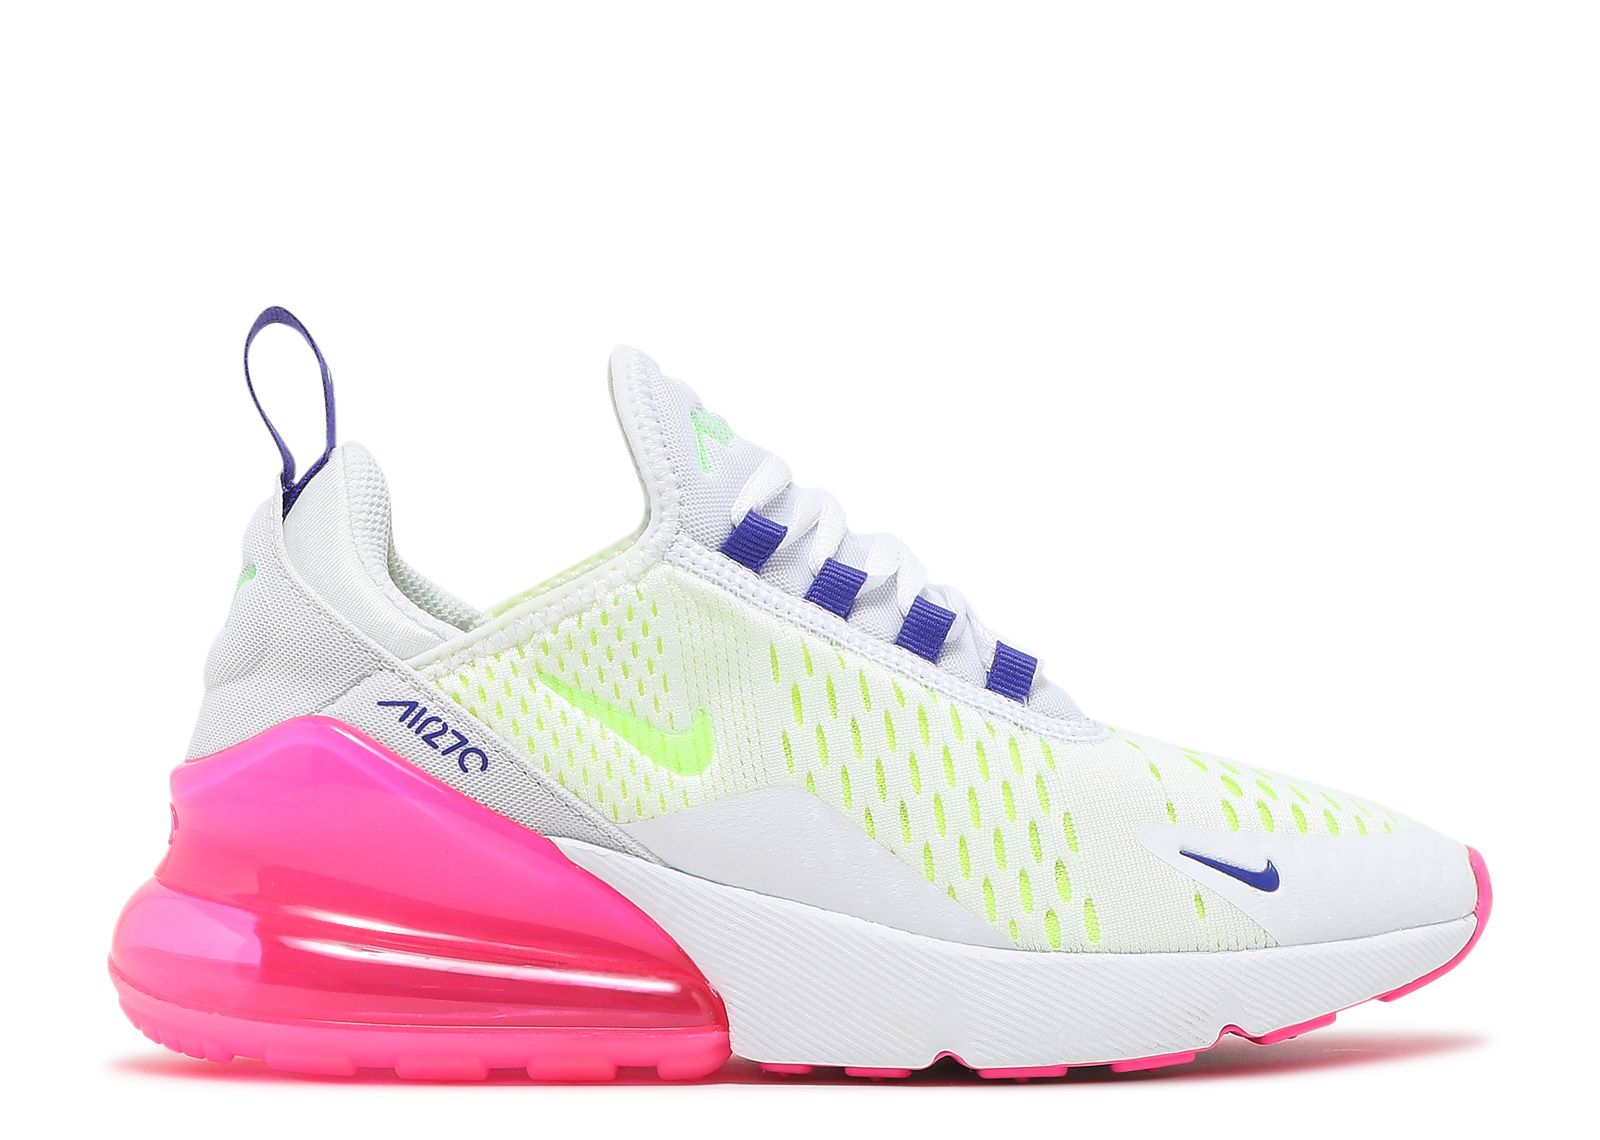 Nike Air Max rainbow nike air max 270 shoes 270 Sneakers | Flight Club